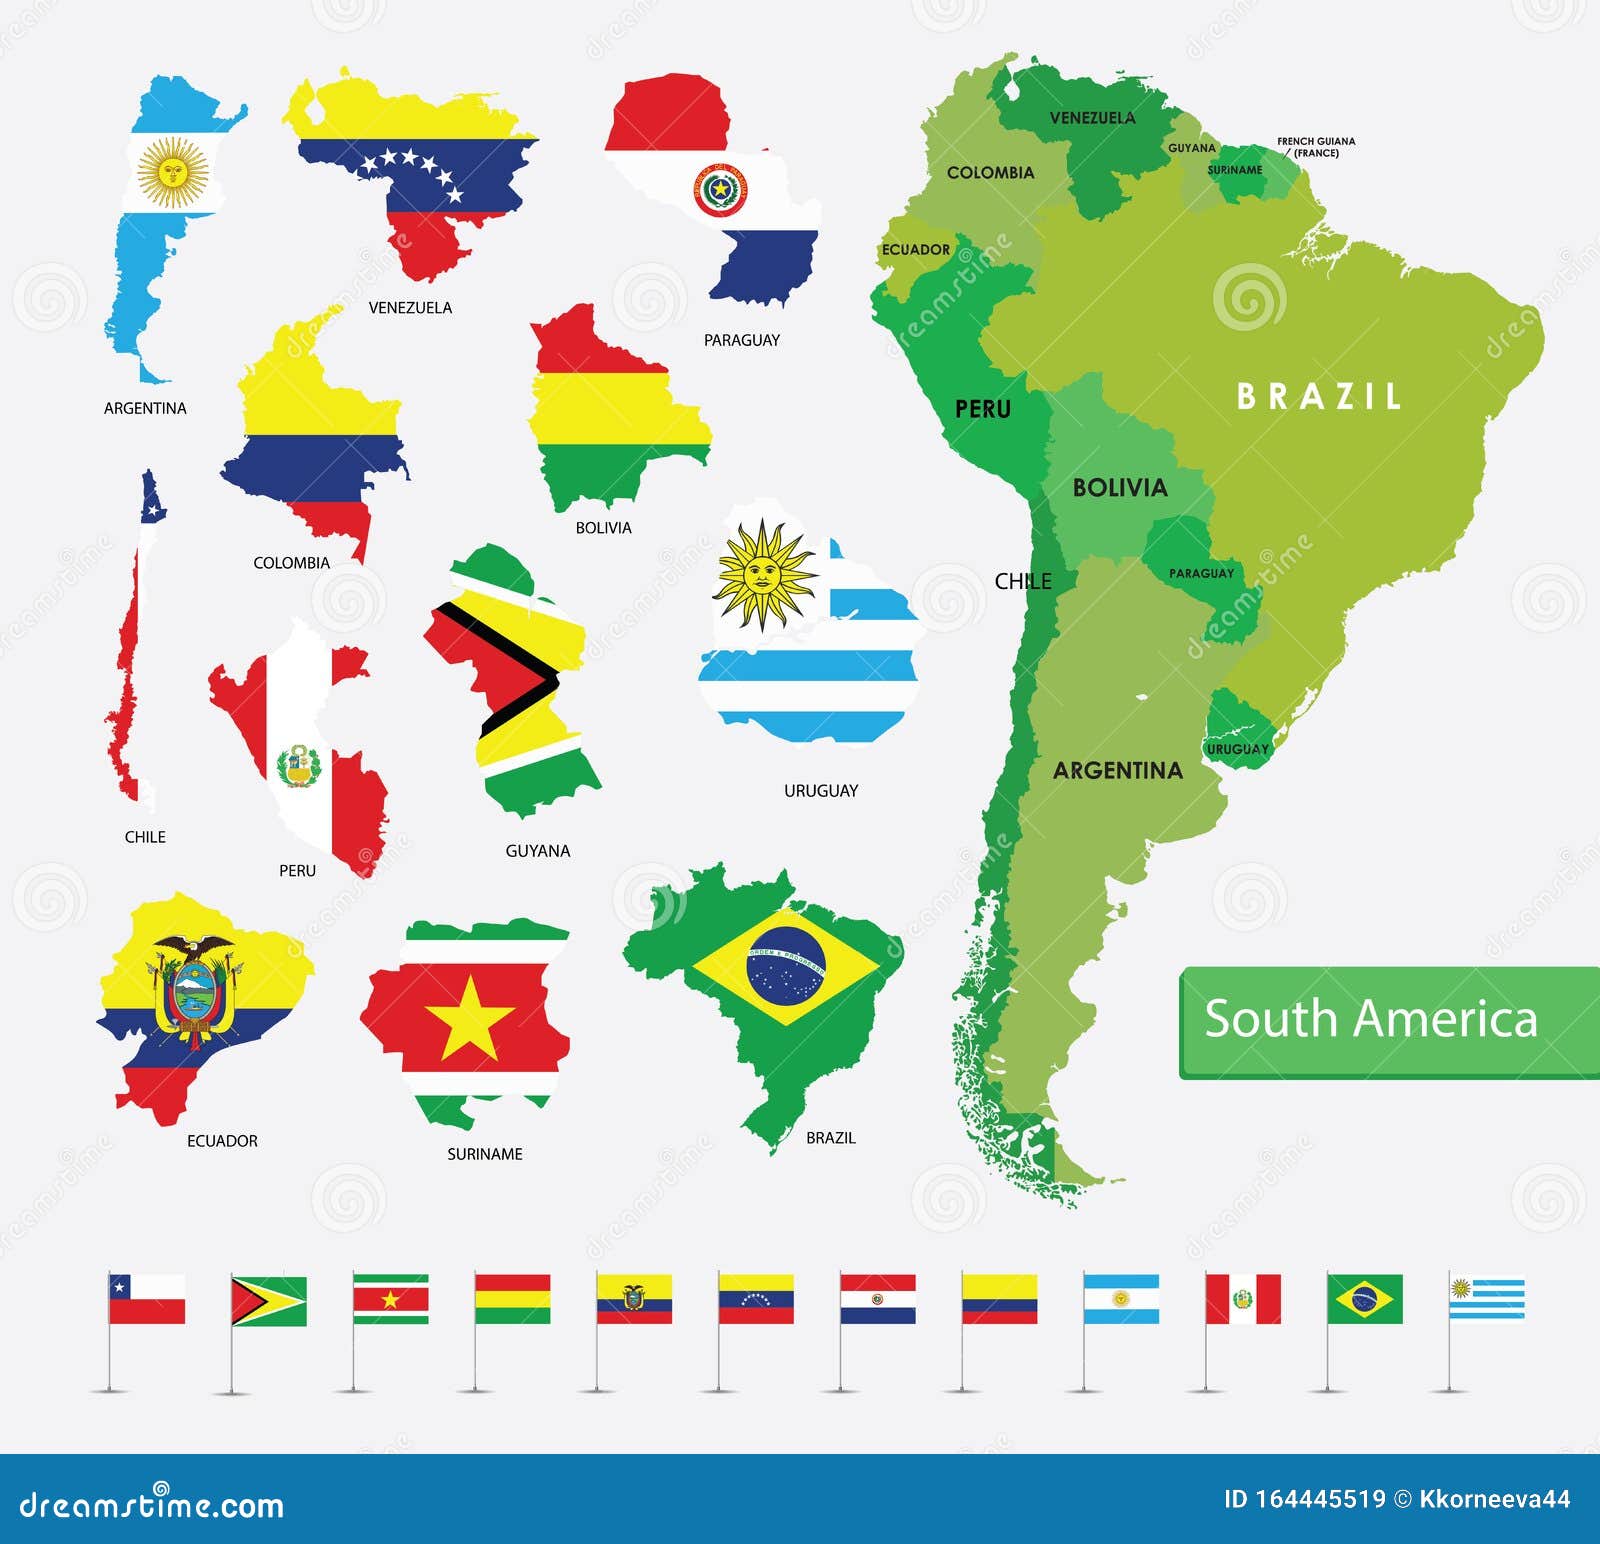 South american country. Флаг Южной Америки. Карта Южной Америки с флагами. Силуэты стран Южной Америки. Флаги стран Южной Америки.